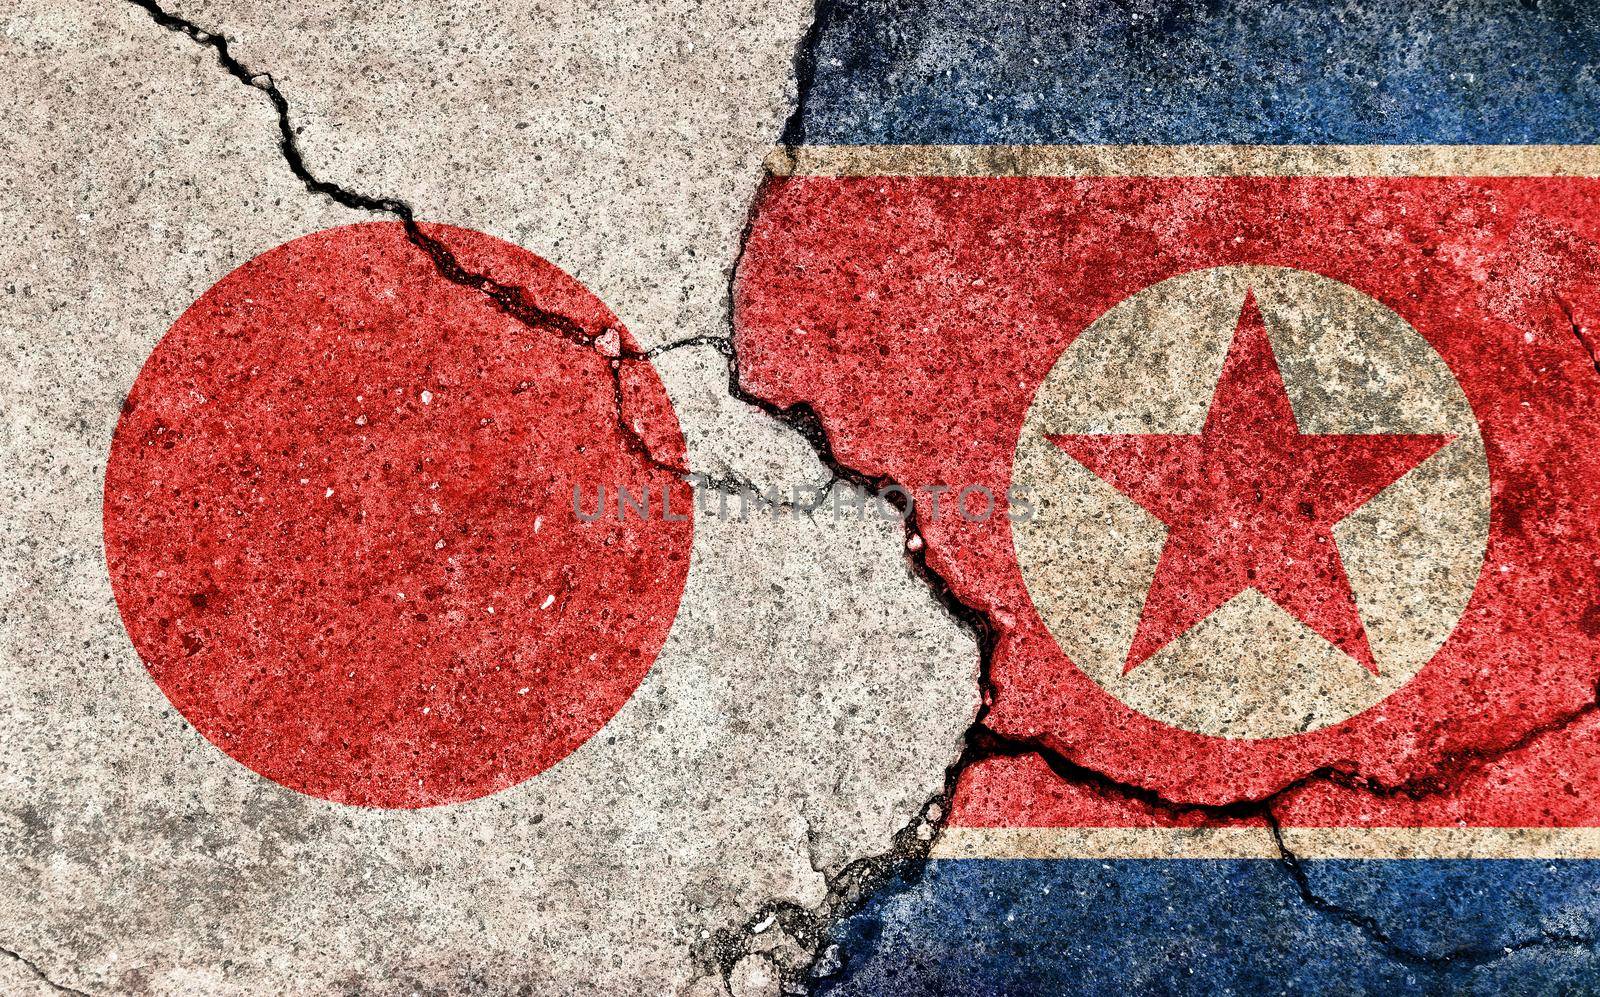 Grunge country flag illustration (cracked concrete background) / Japan vs North korea (Political or economic conflict) by barks